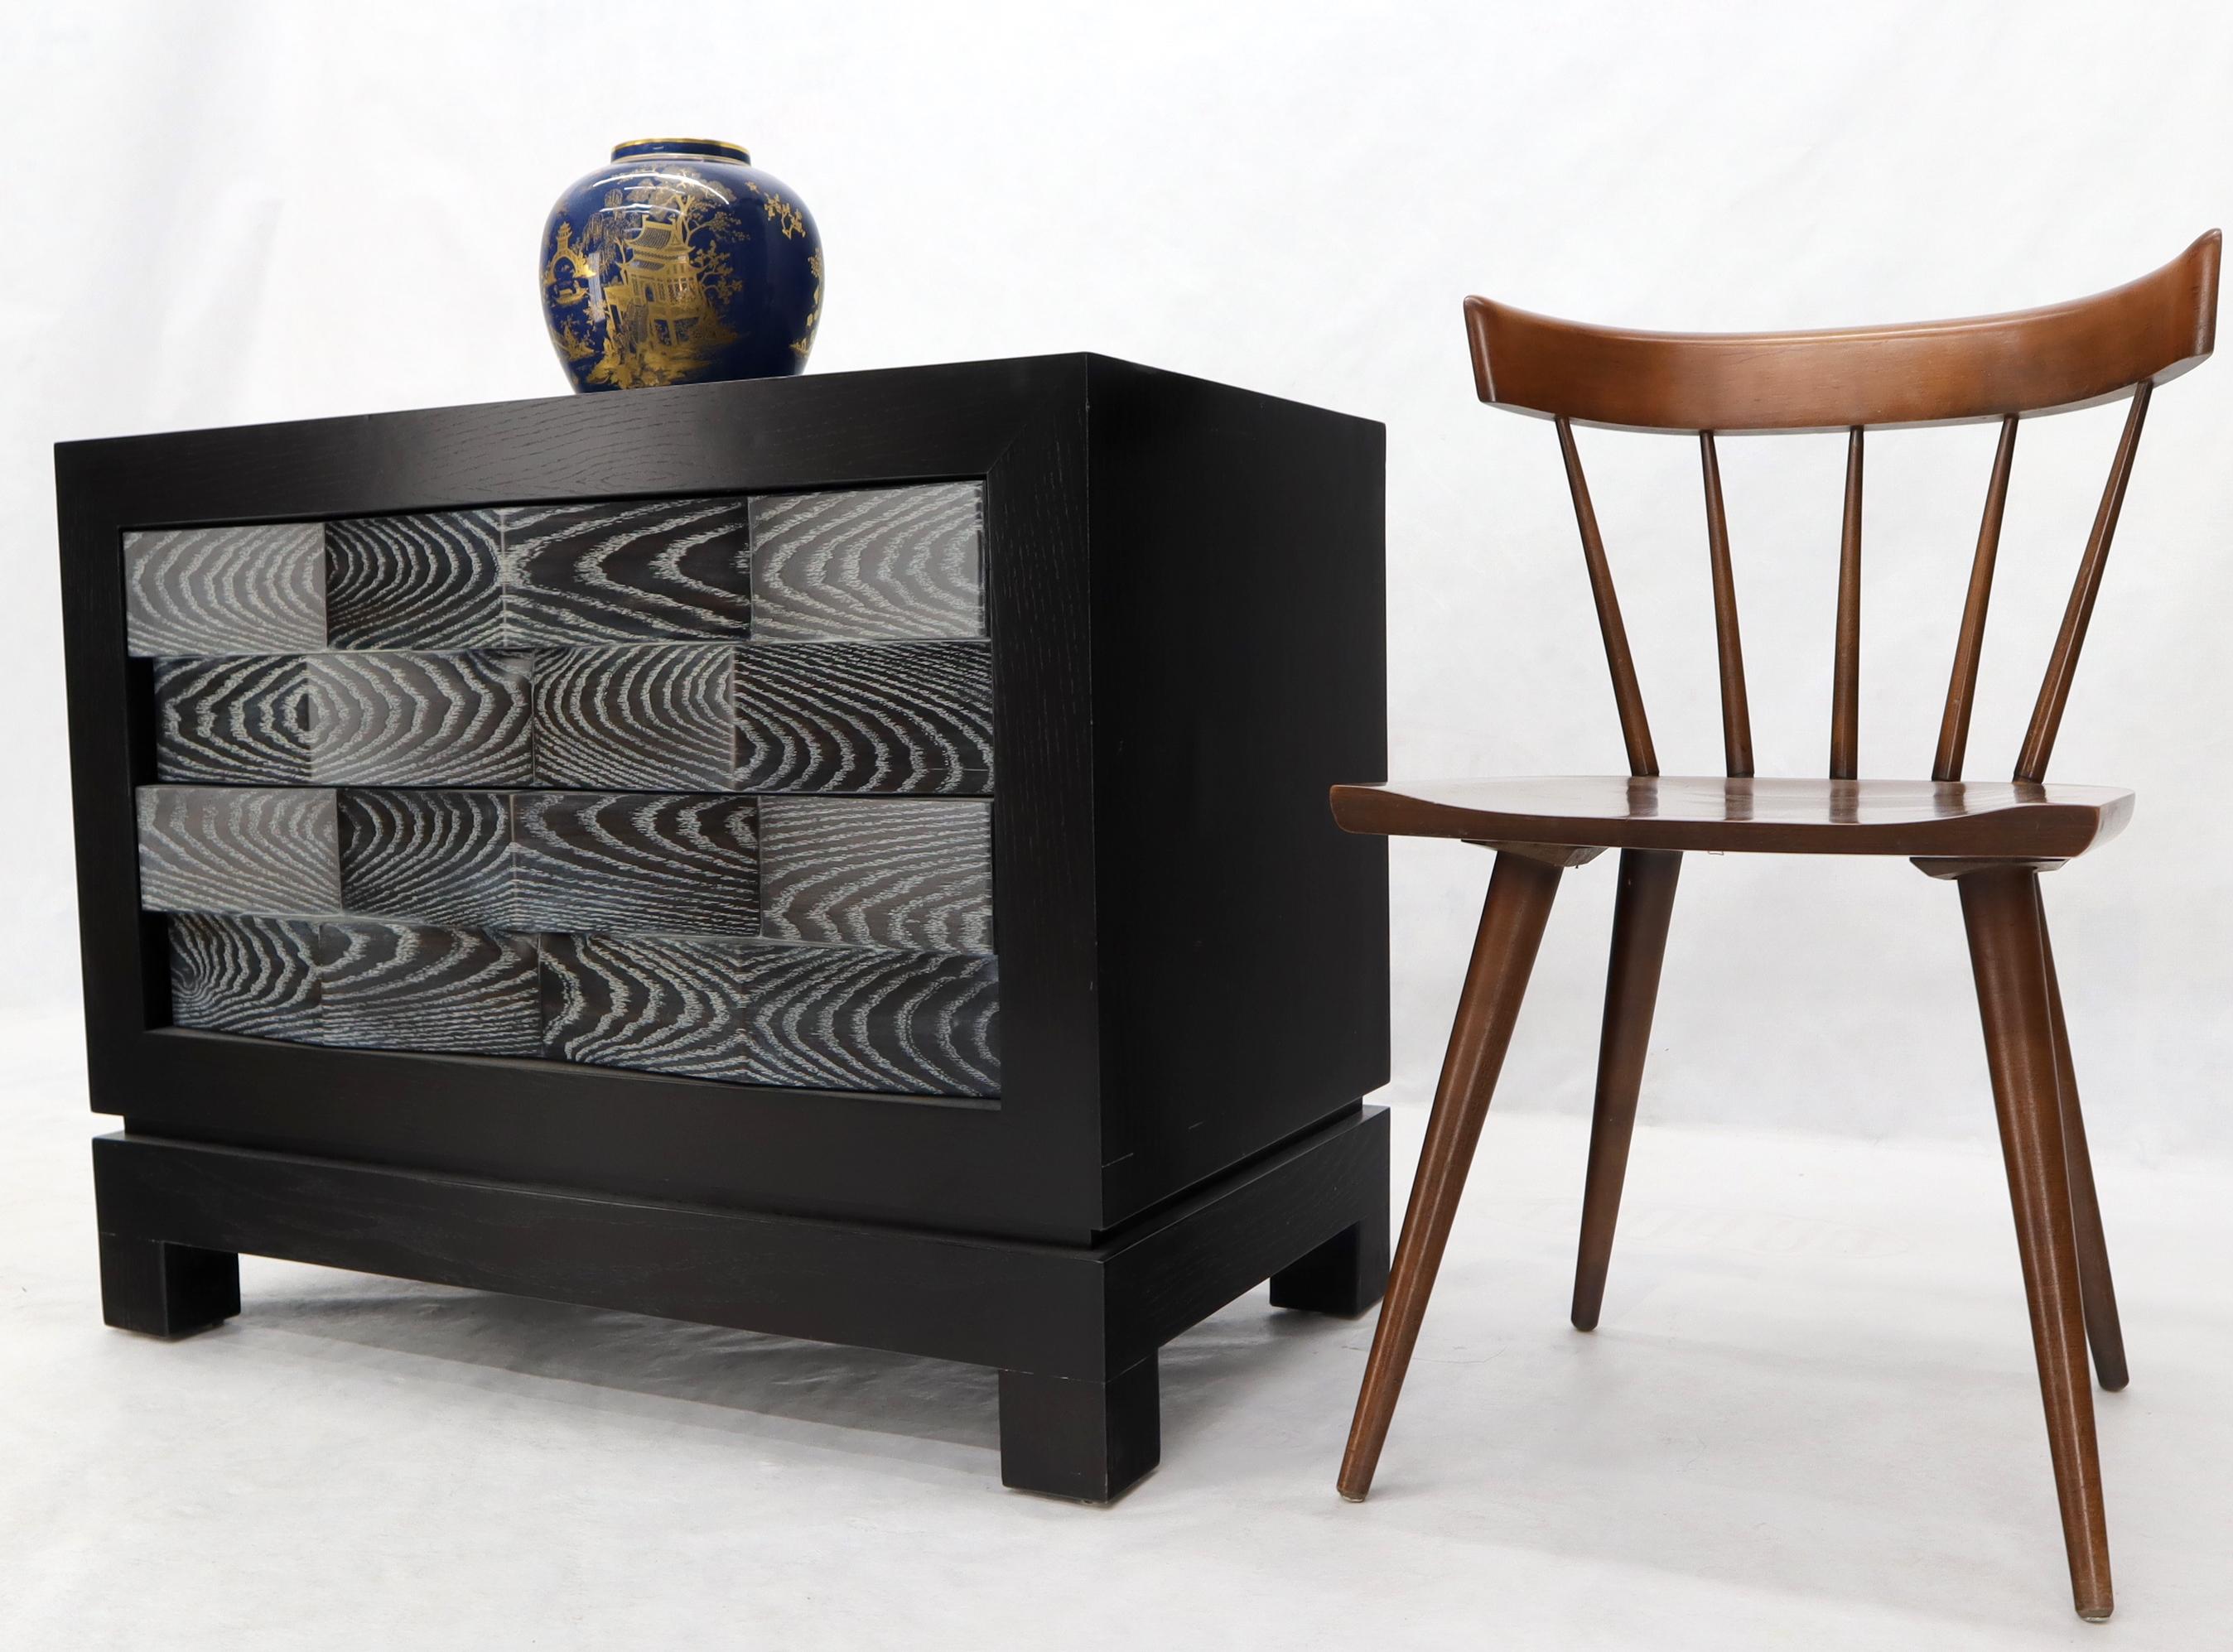 Vintage Mid-Century Modern black lacquer cerused drawers bachelor chest dresser credenza.